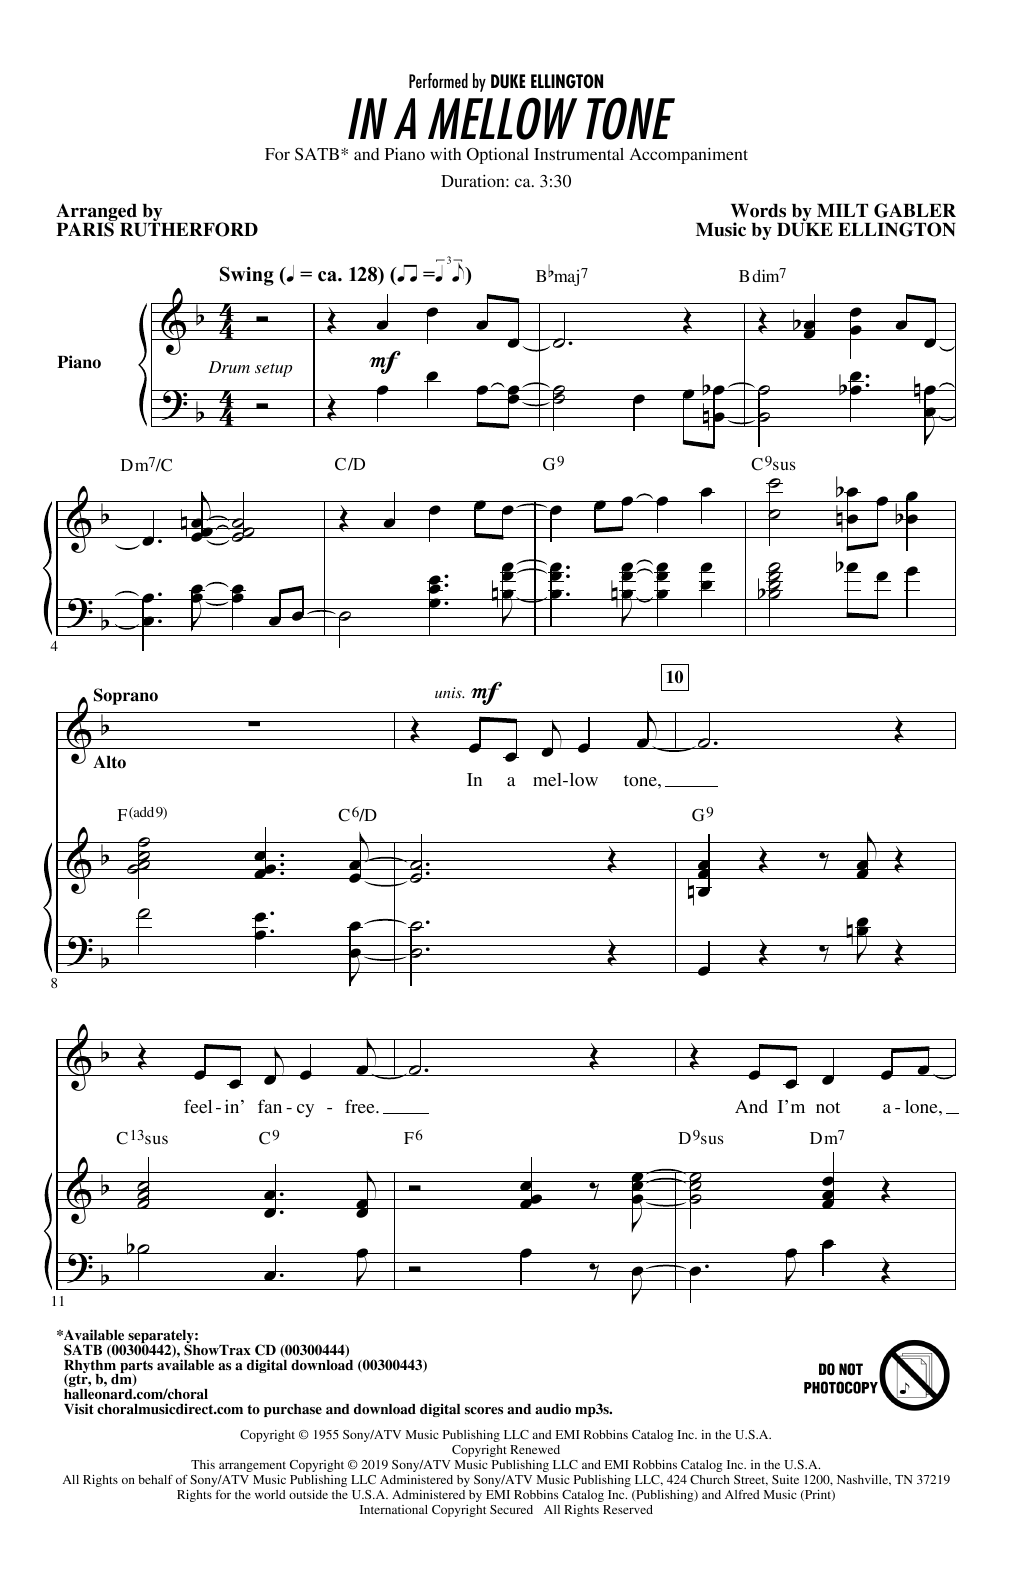 Duke Ellington In A Mellow Tone (arr. Paris Rutherford) Sheet Music Notes & Chords for SATB Choir - Download or Print PDF